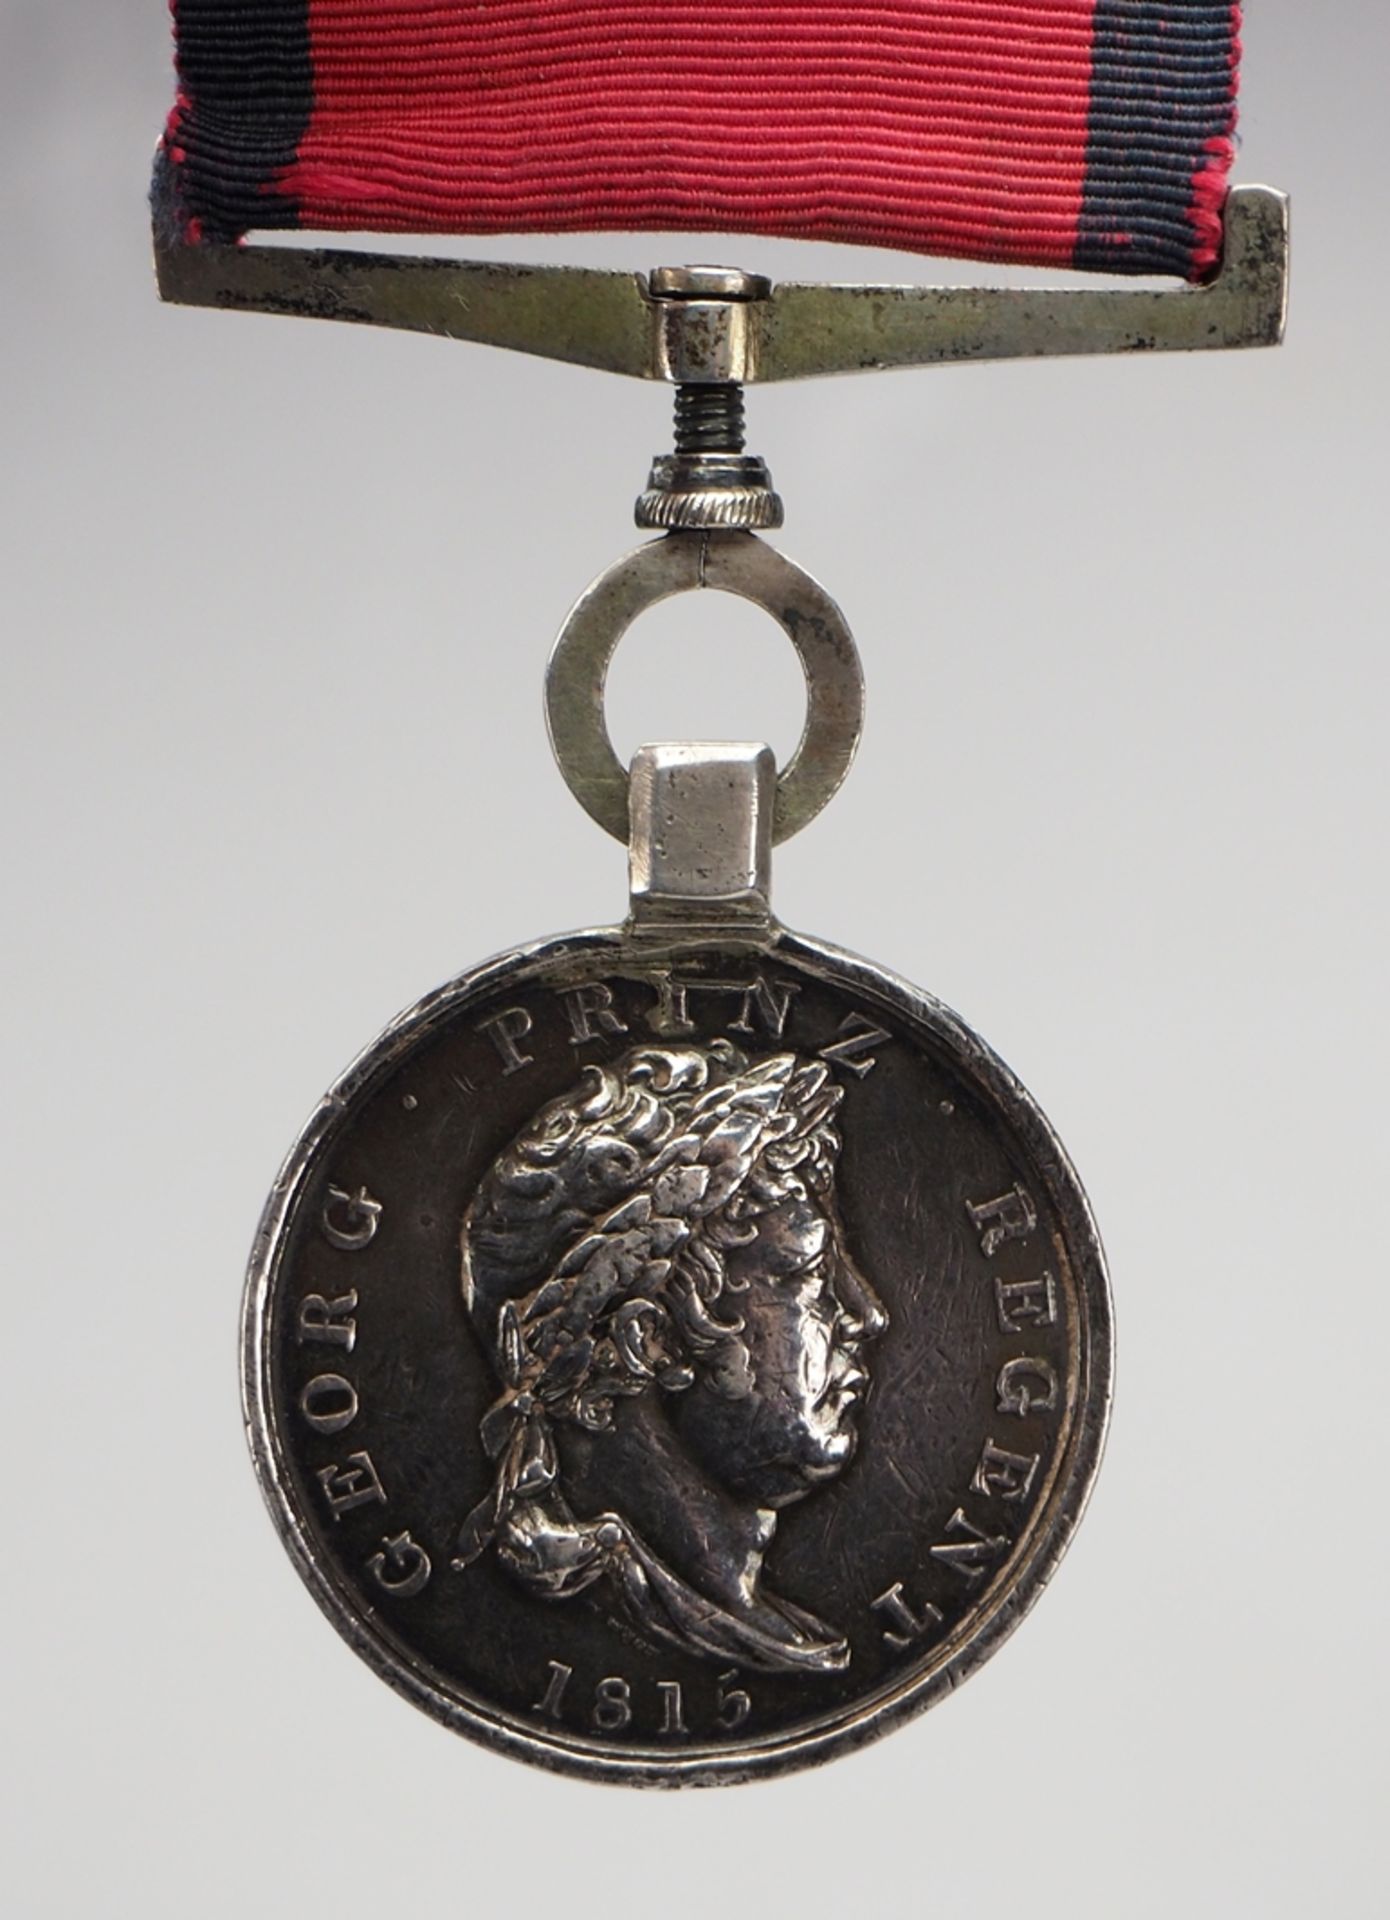 Hannover: Waterloo-Medaille eines Corporal des Husaren Regiment "Prinz Regent".